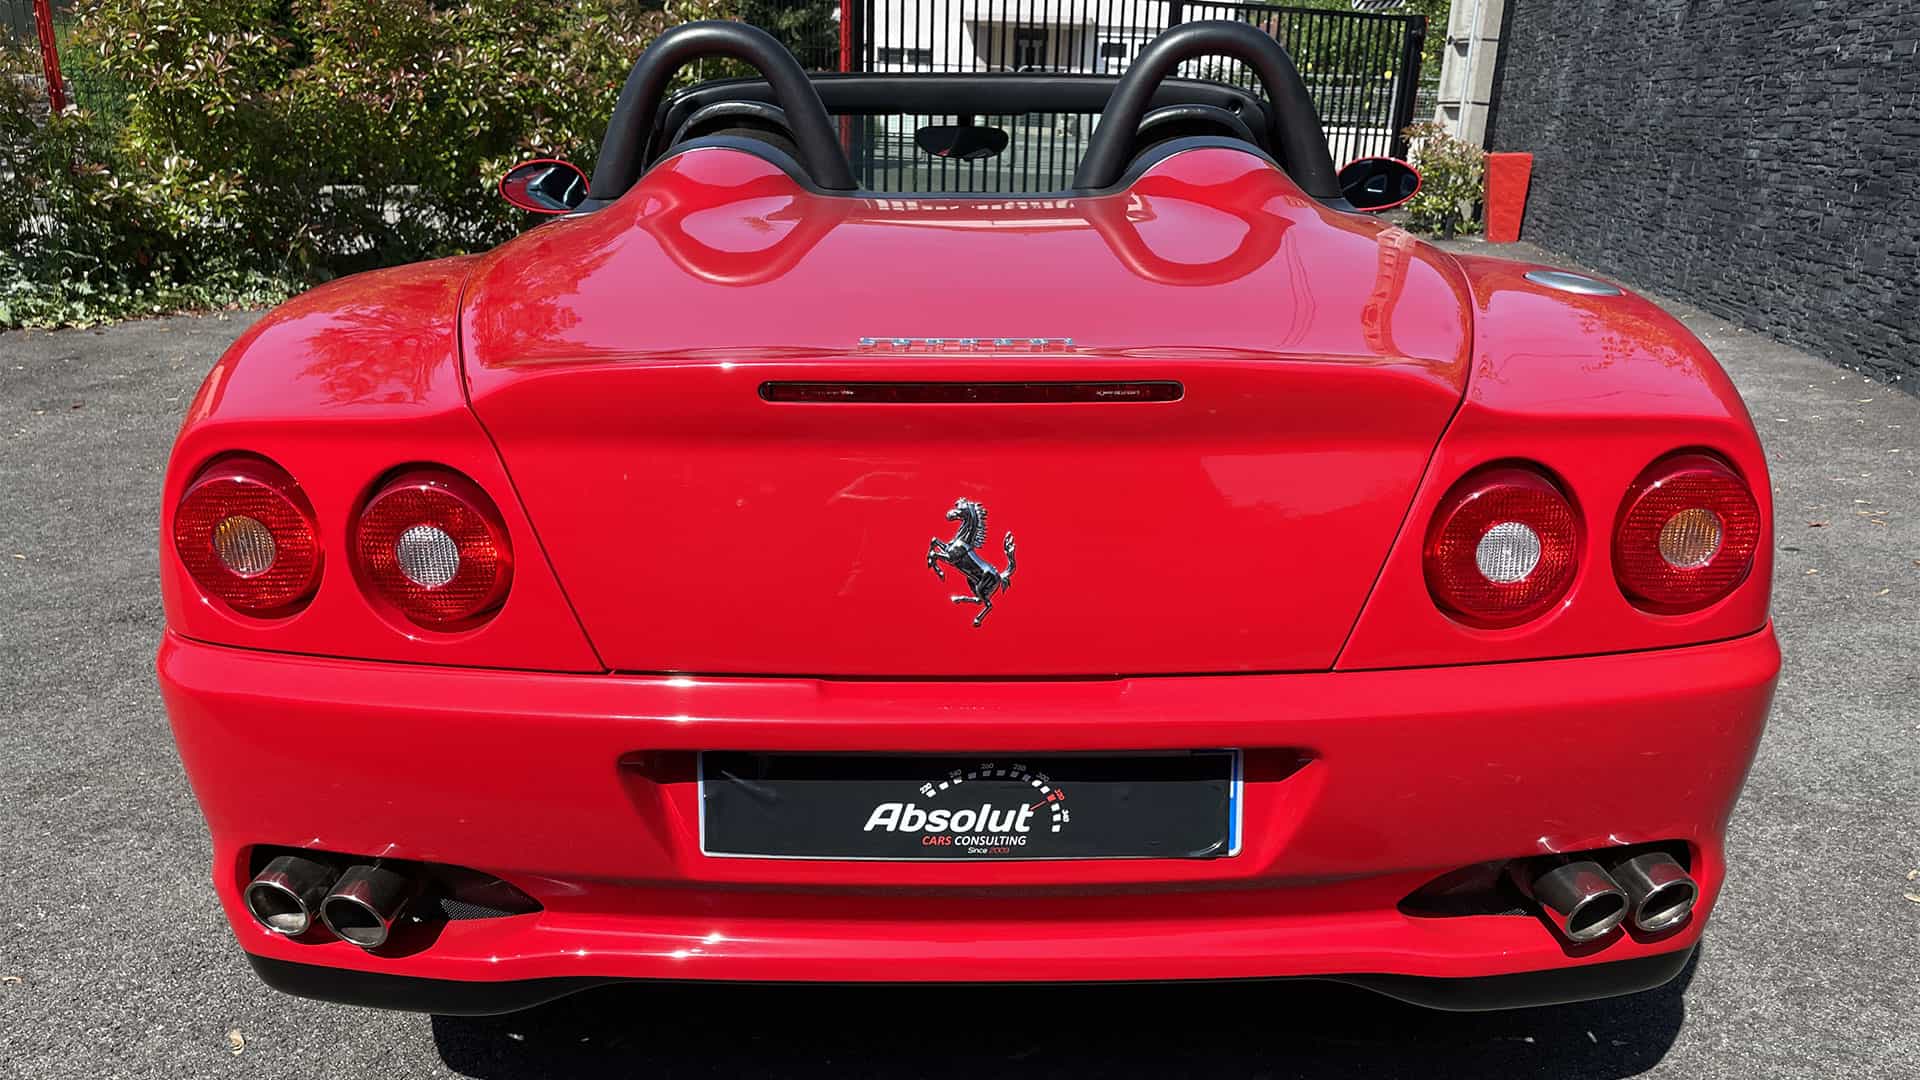 Vue arrière de la Ferrari 550 Barchetta